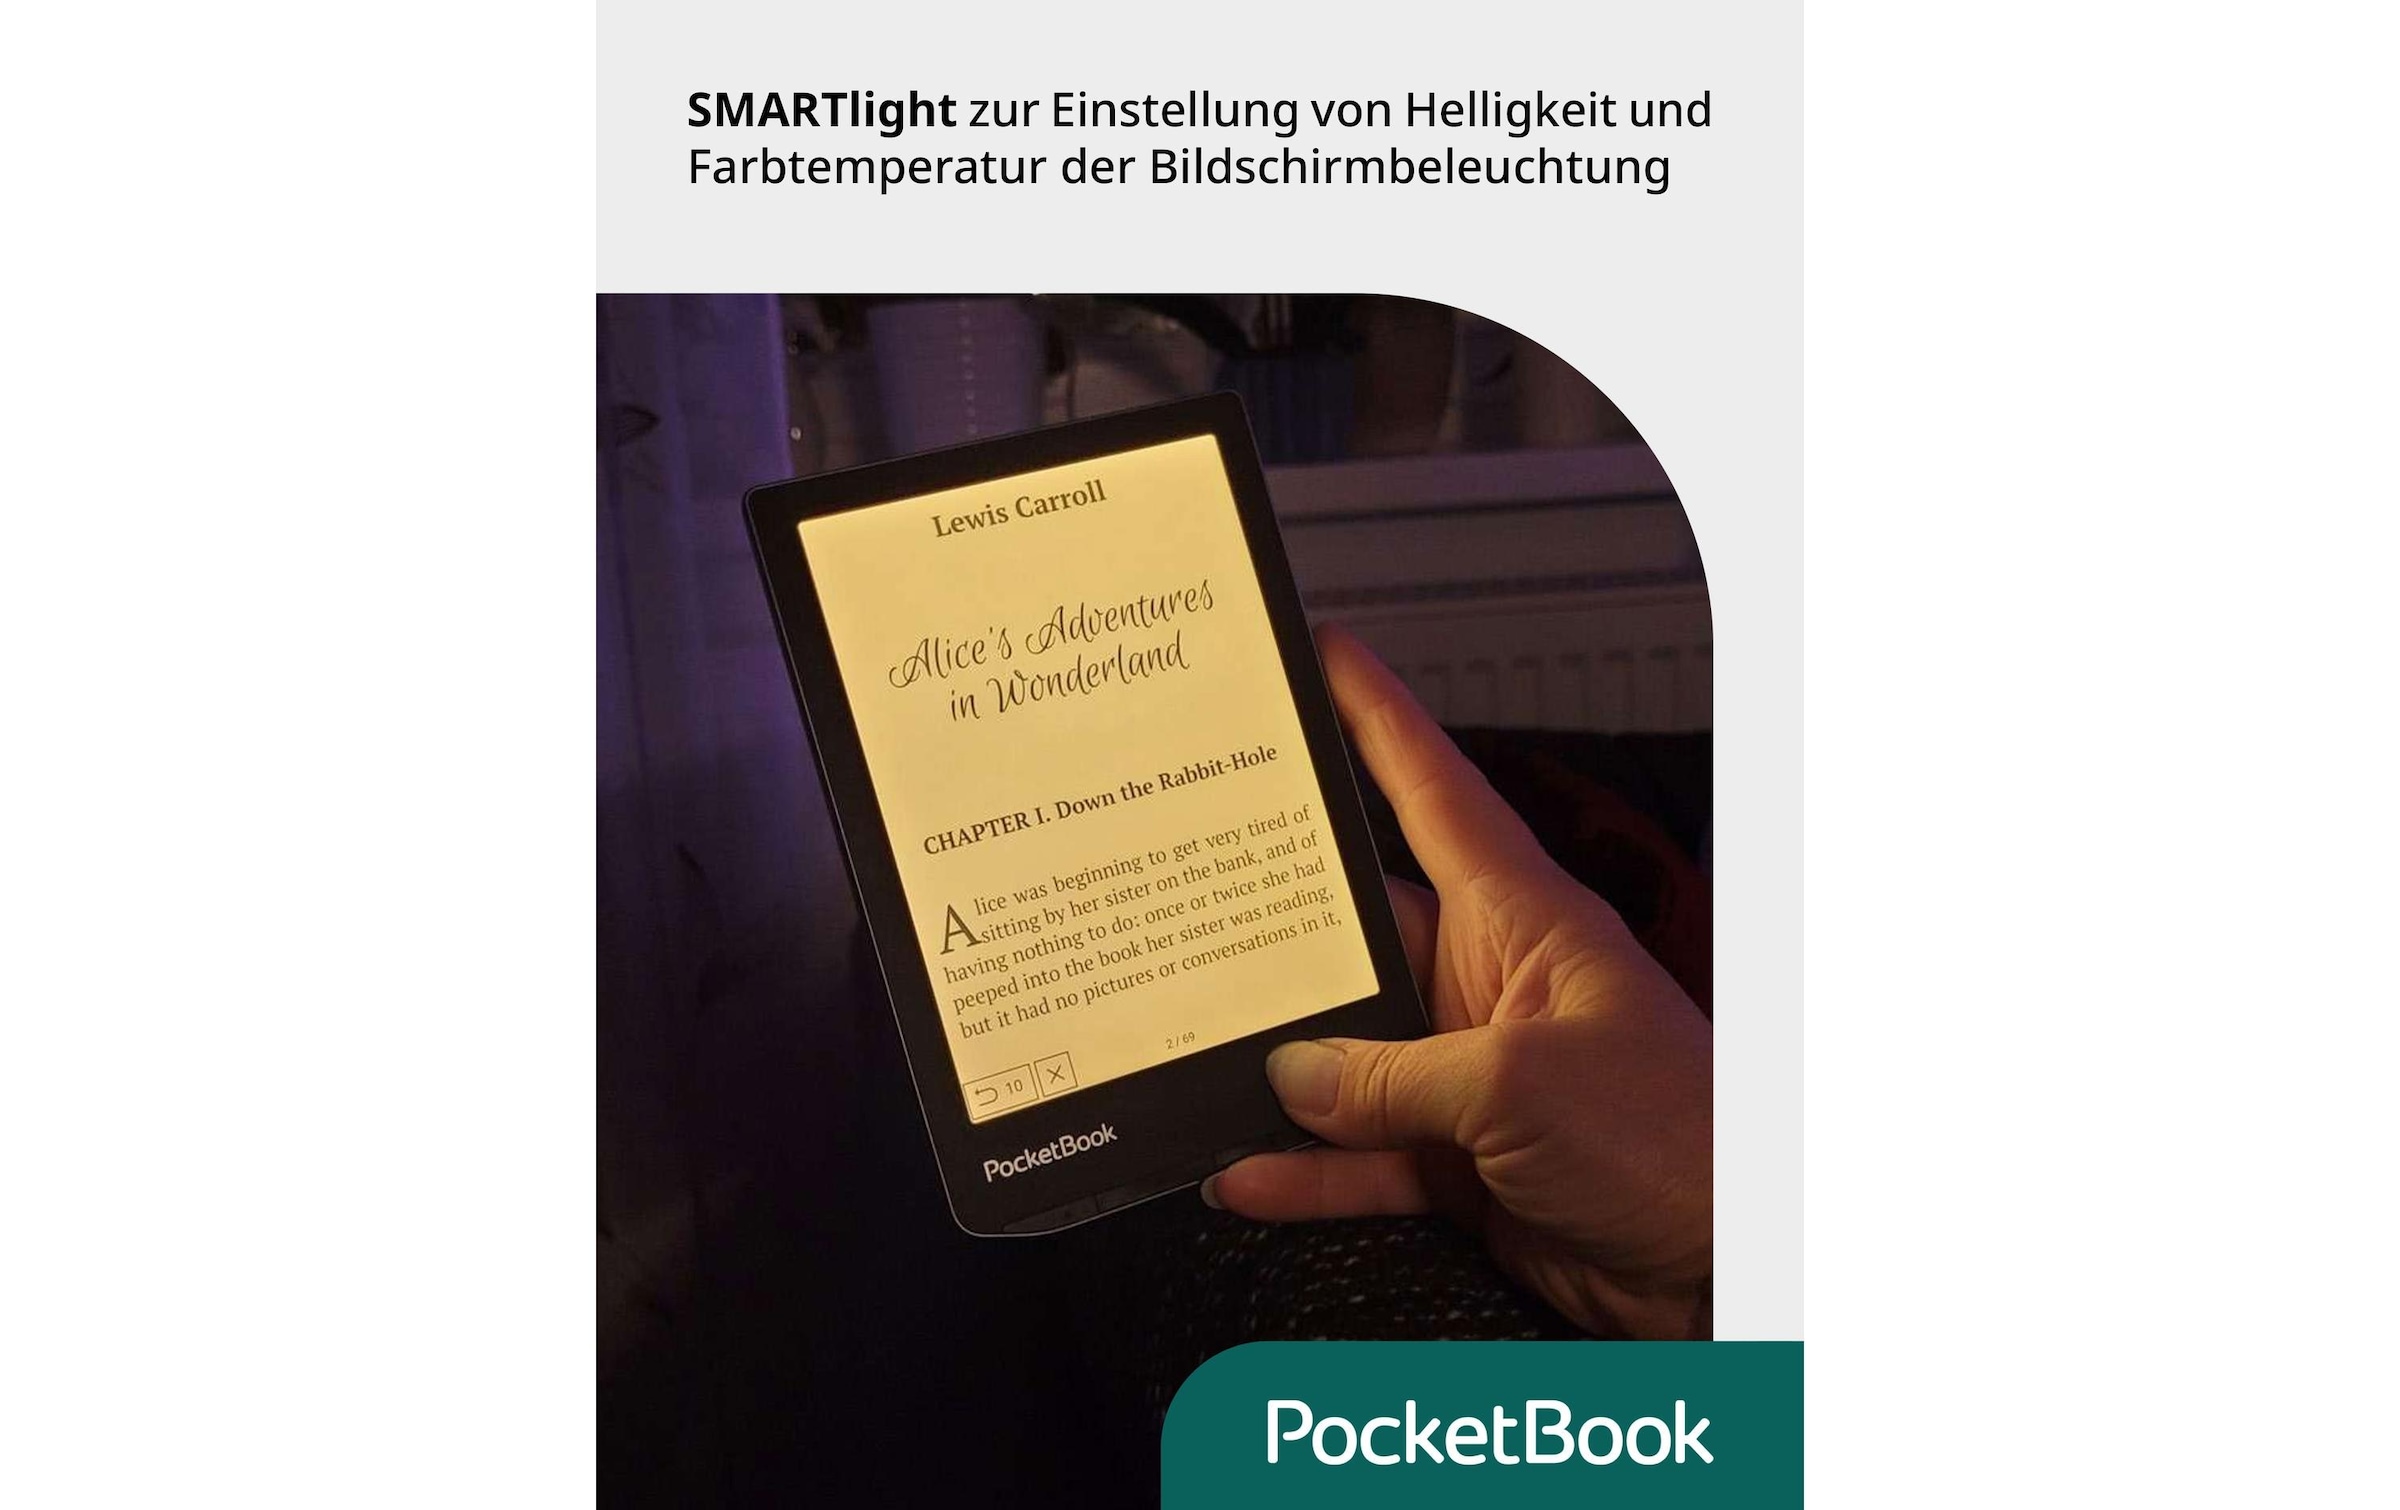 PocketBook E-Book »Reader Verse Mist Grey«